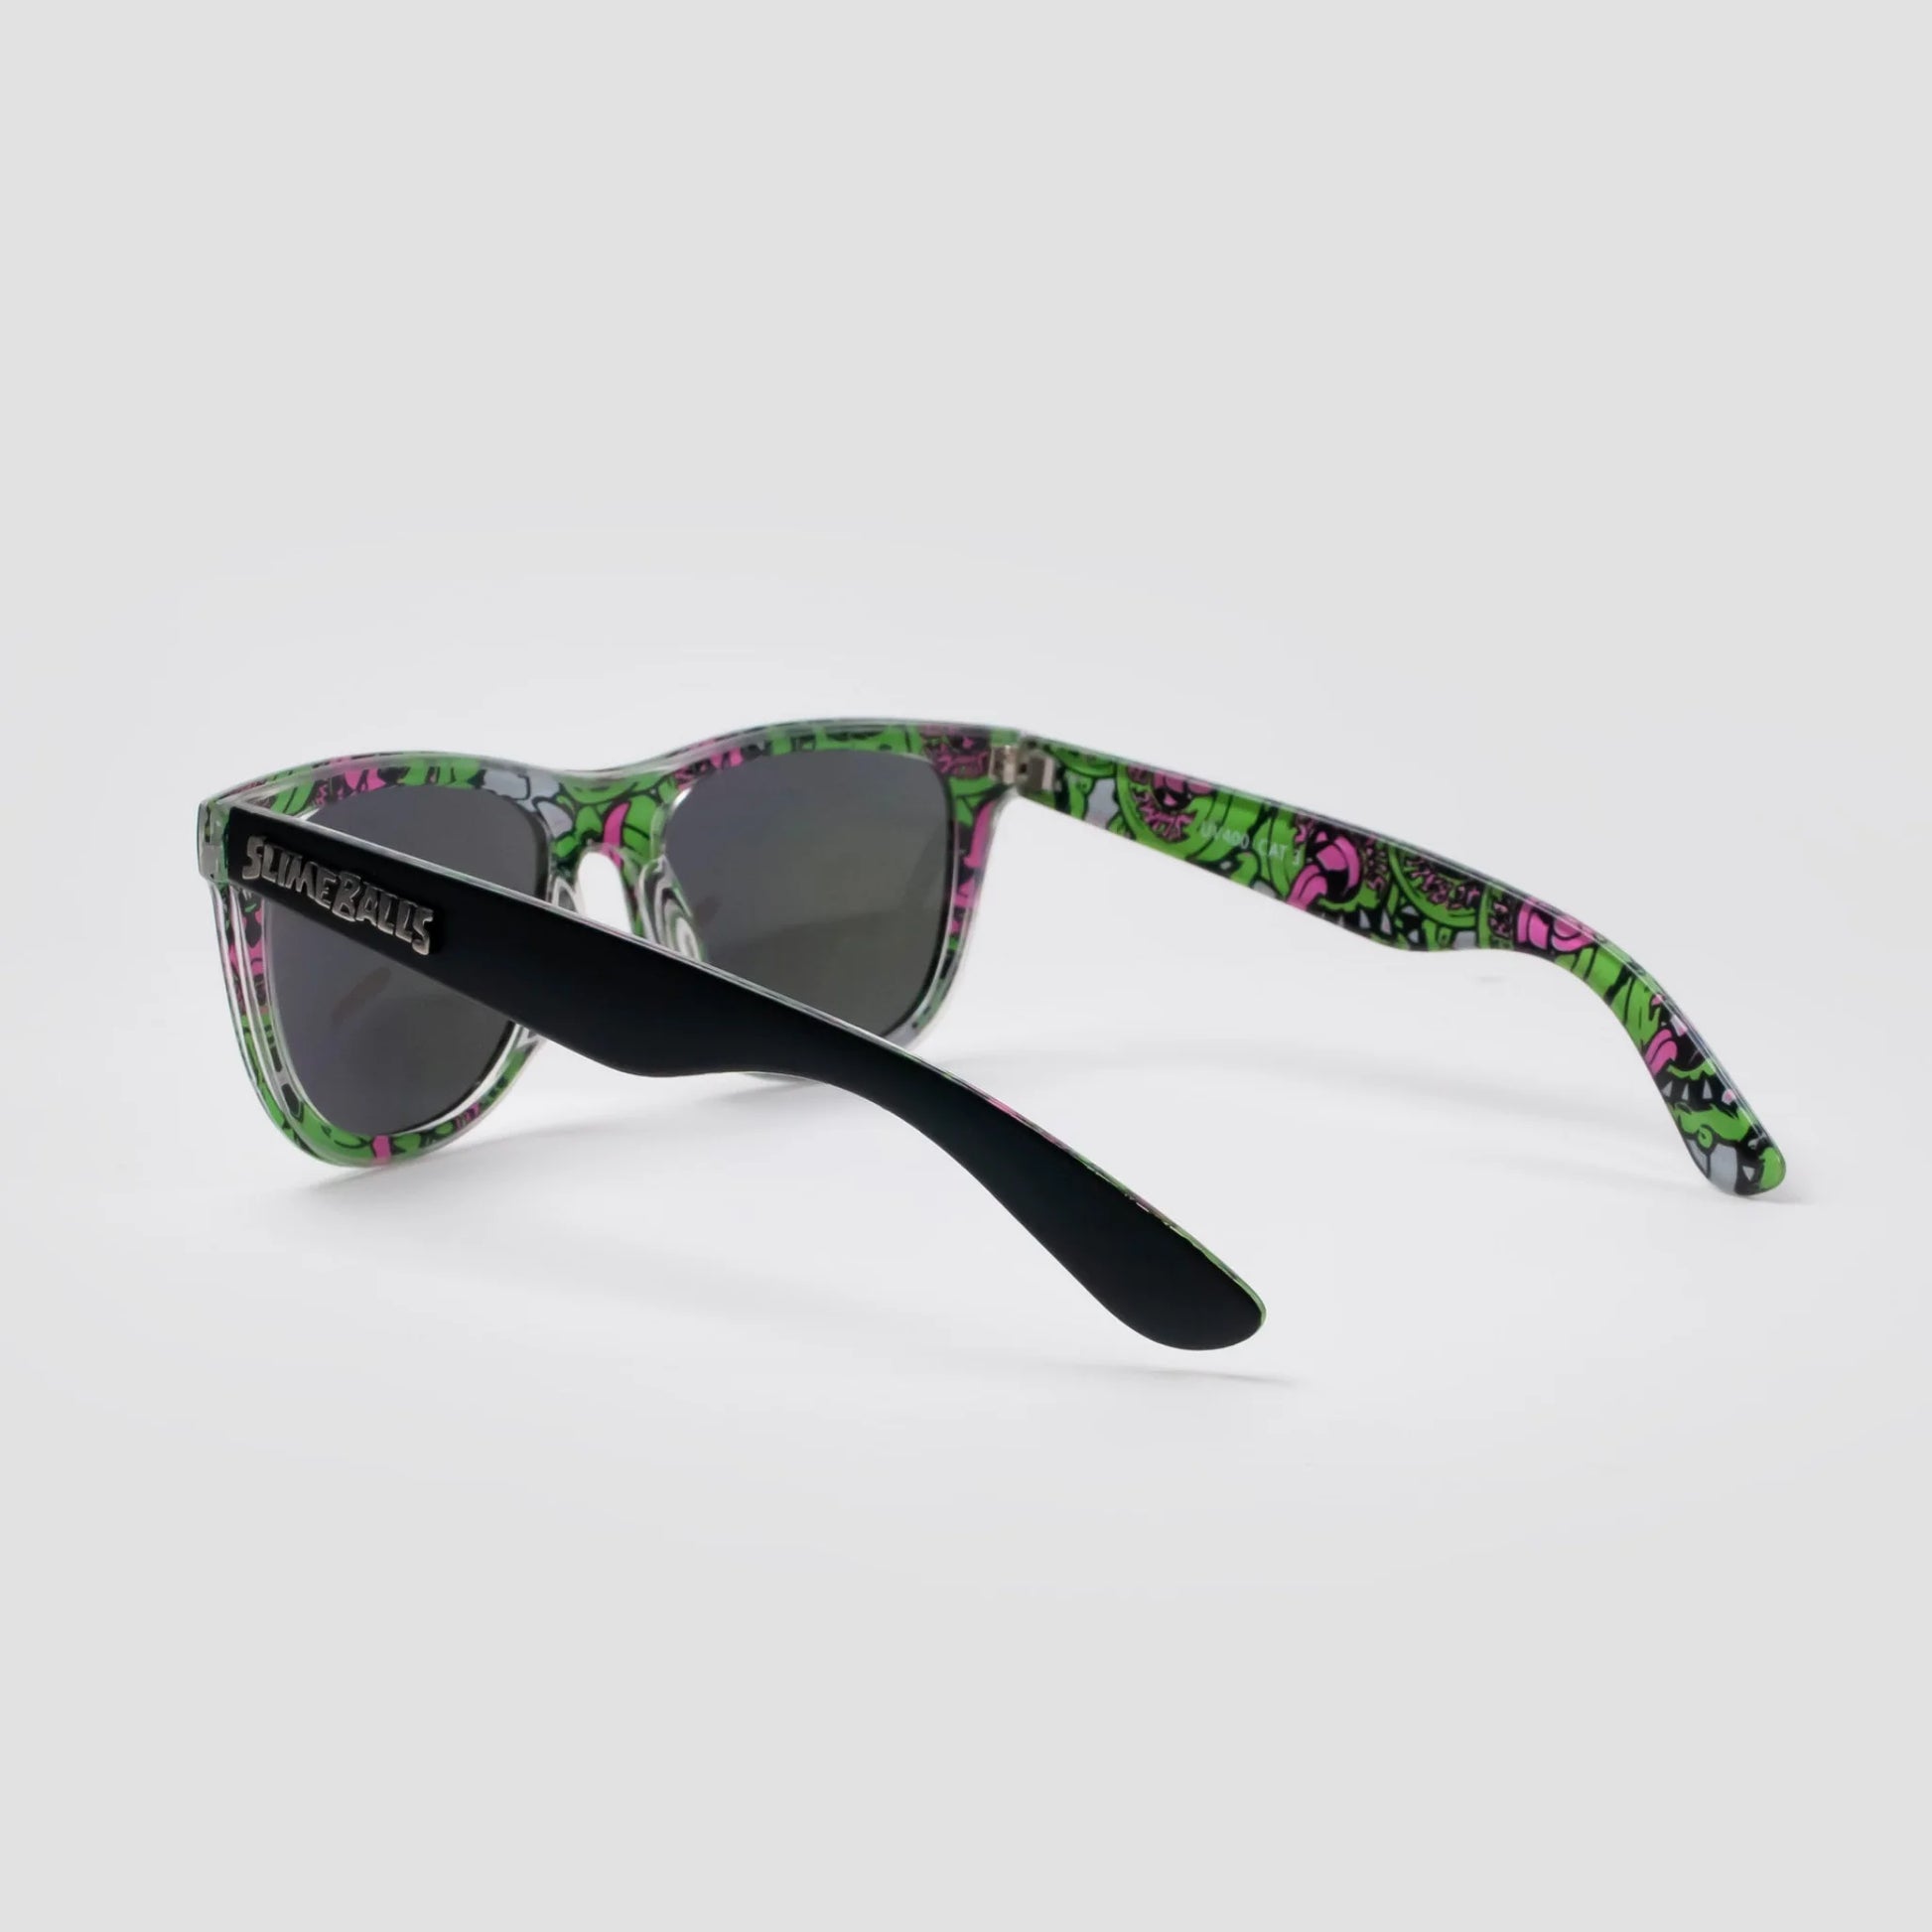 Santa Cruz SB Insider Sunglasses - Black/Pink - Prime Delux Store